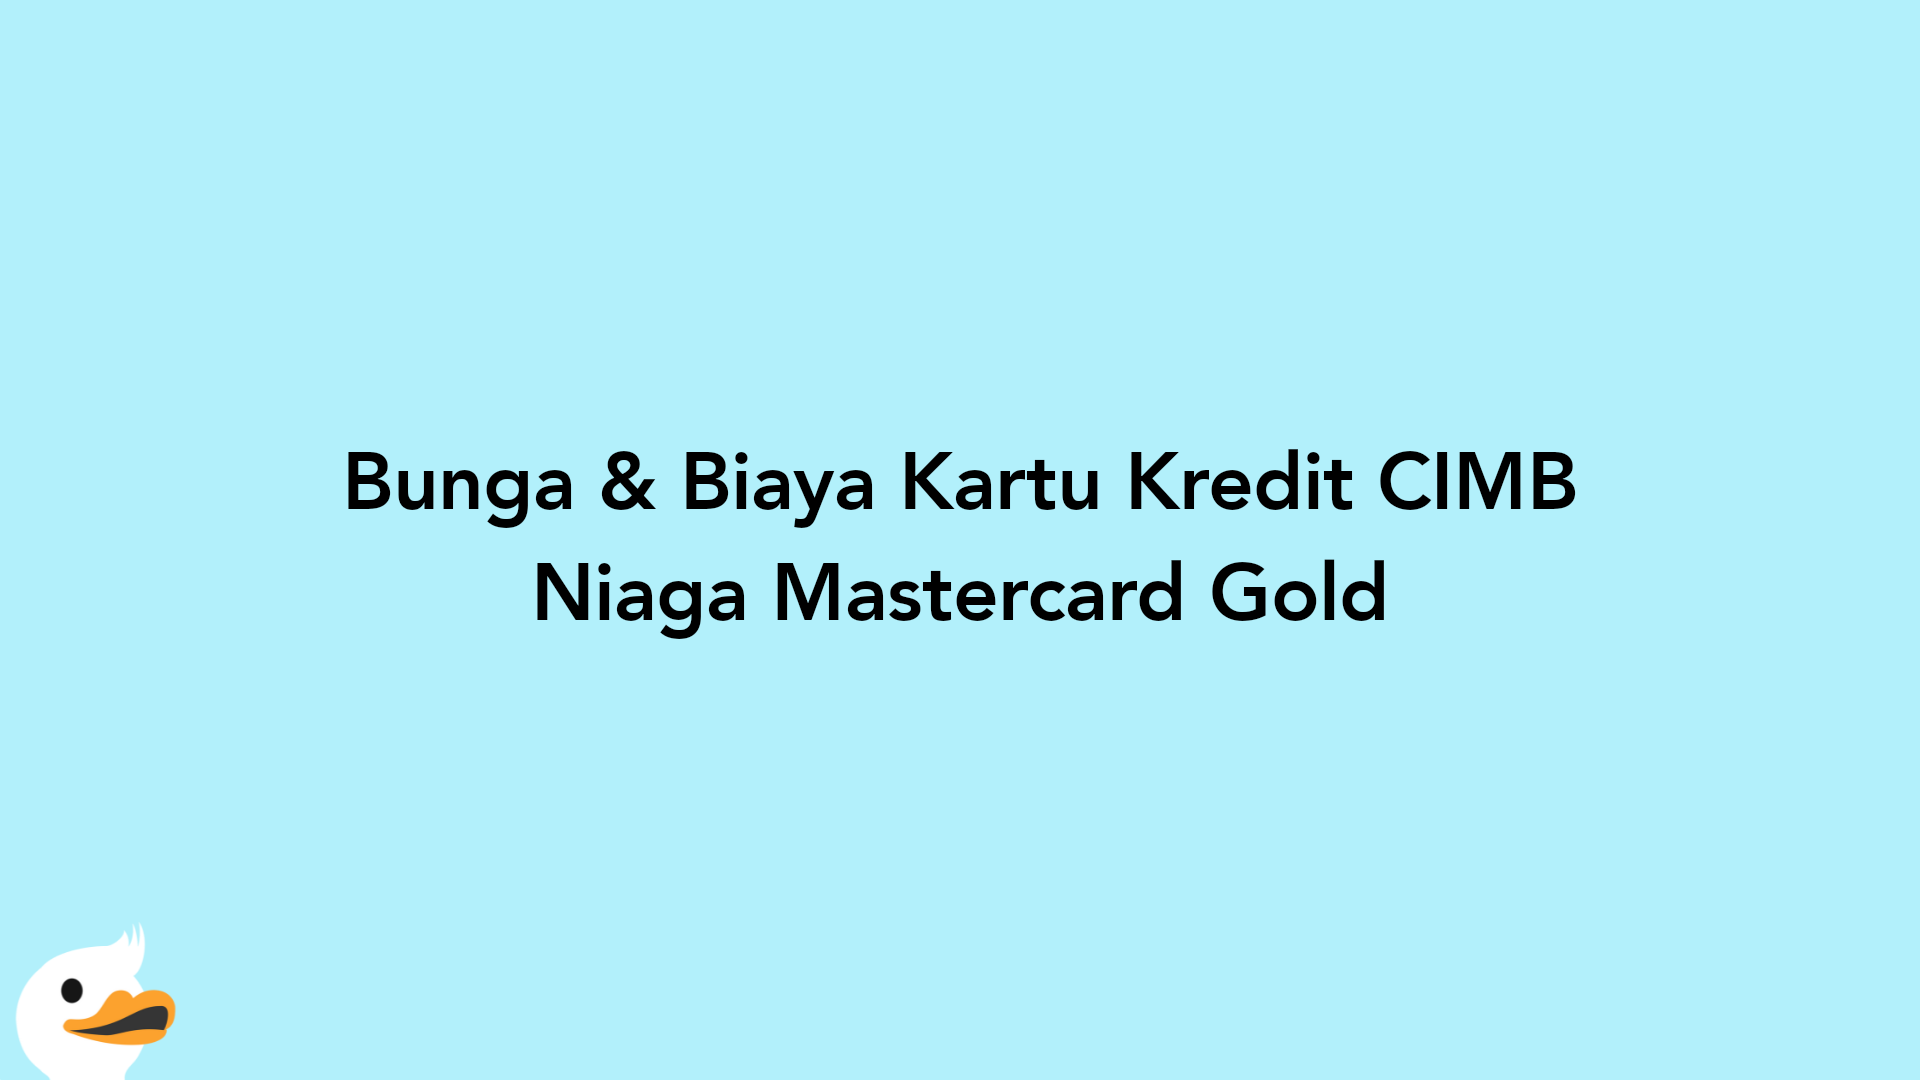 Bunga & Biaya Kartu Kredit CIMB Niaga Mastercard Gold